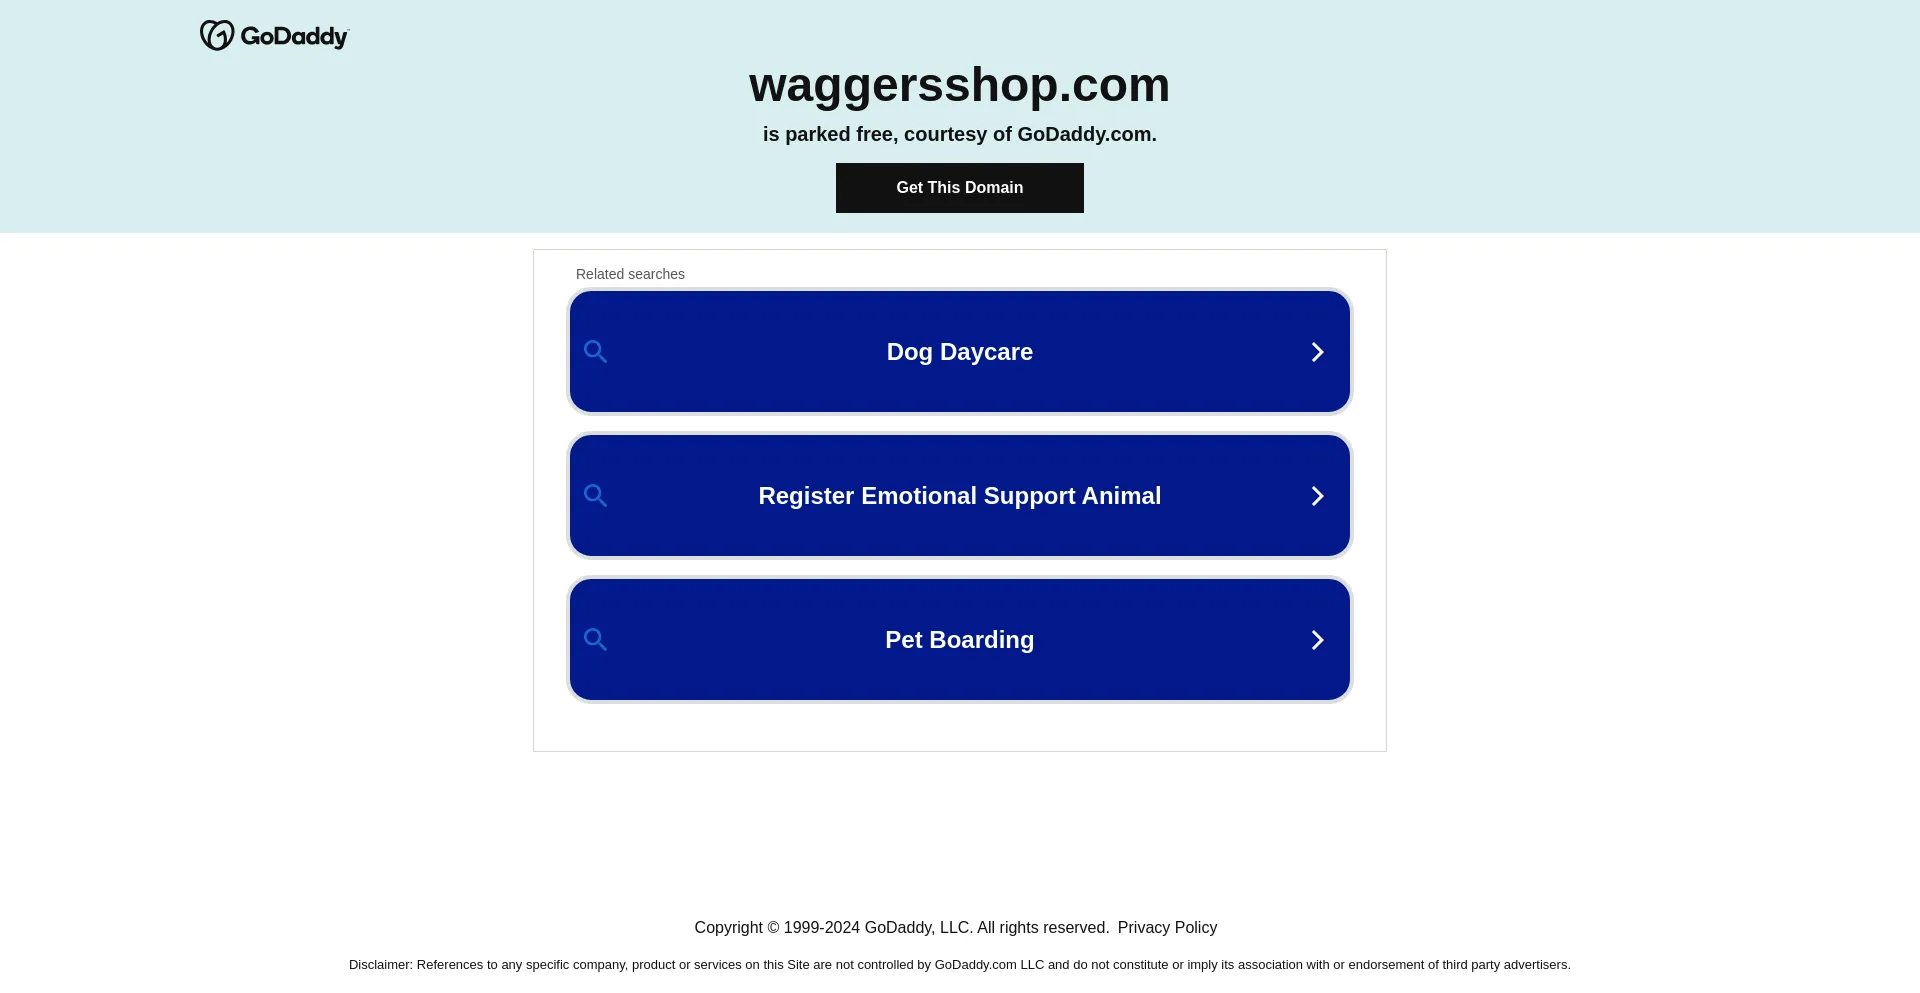 waggersshop.com